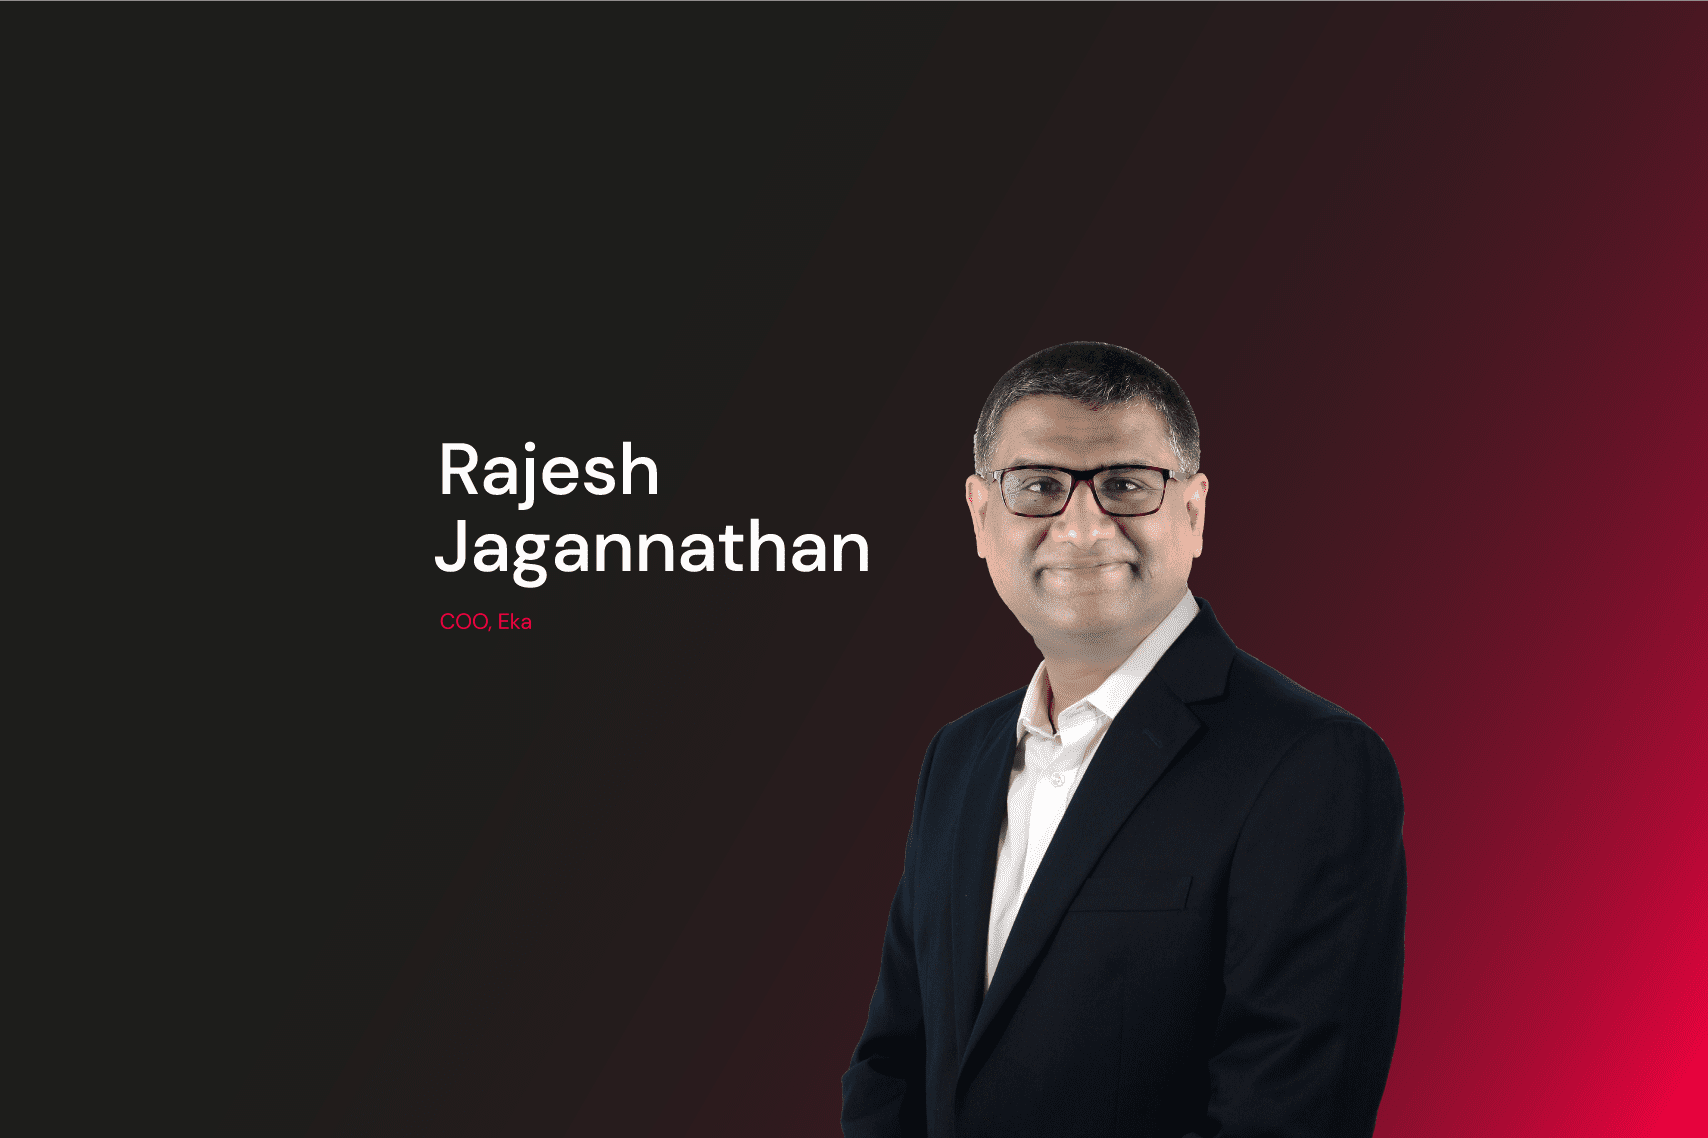 Rajesh Jagannathan